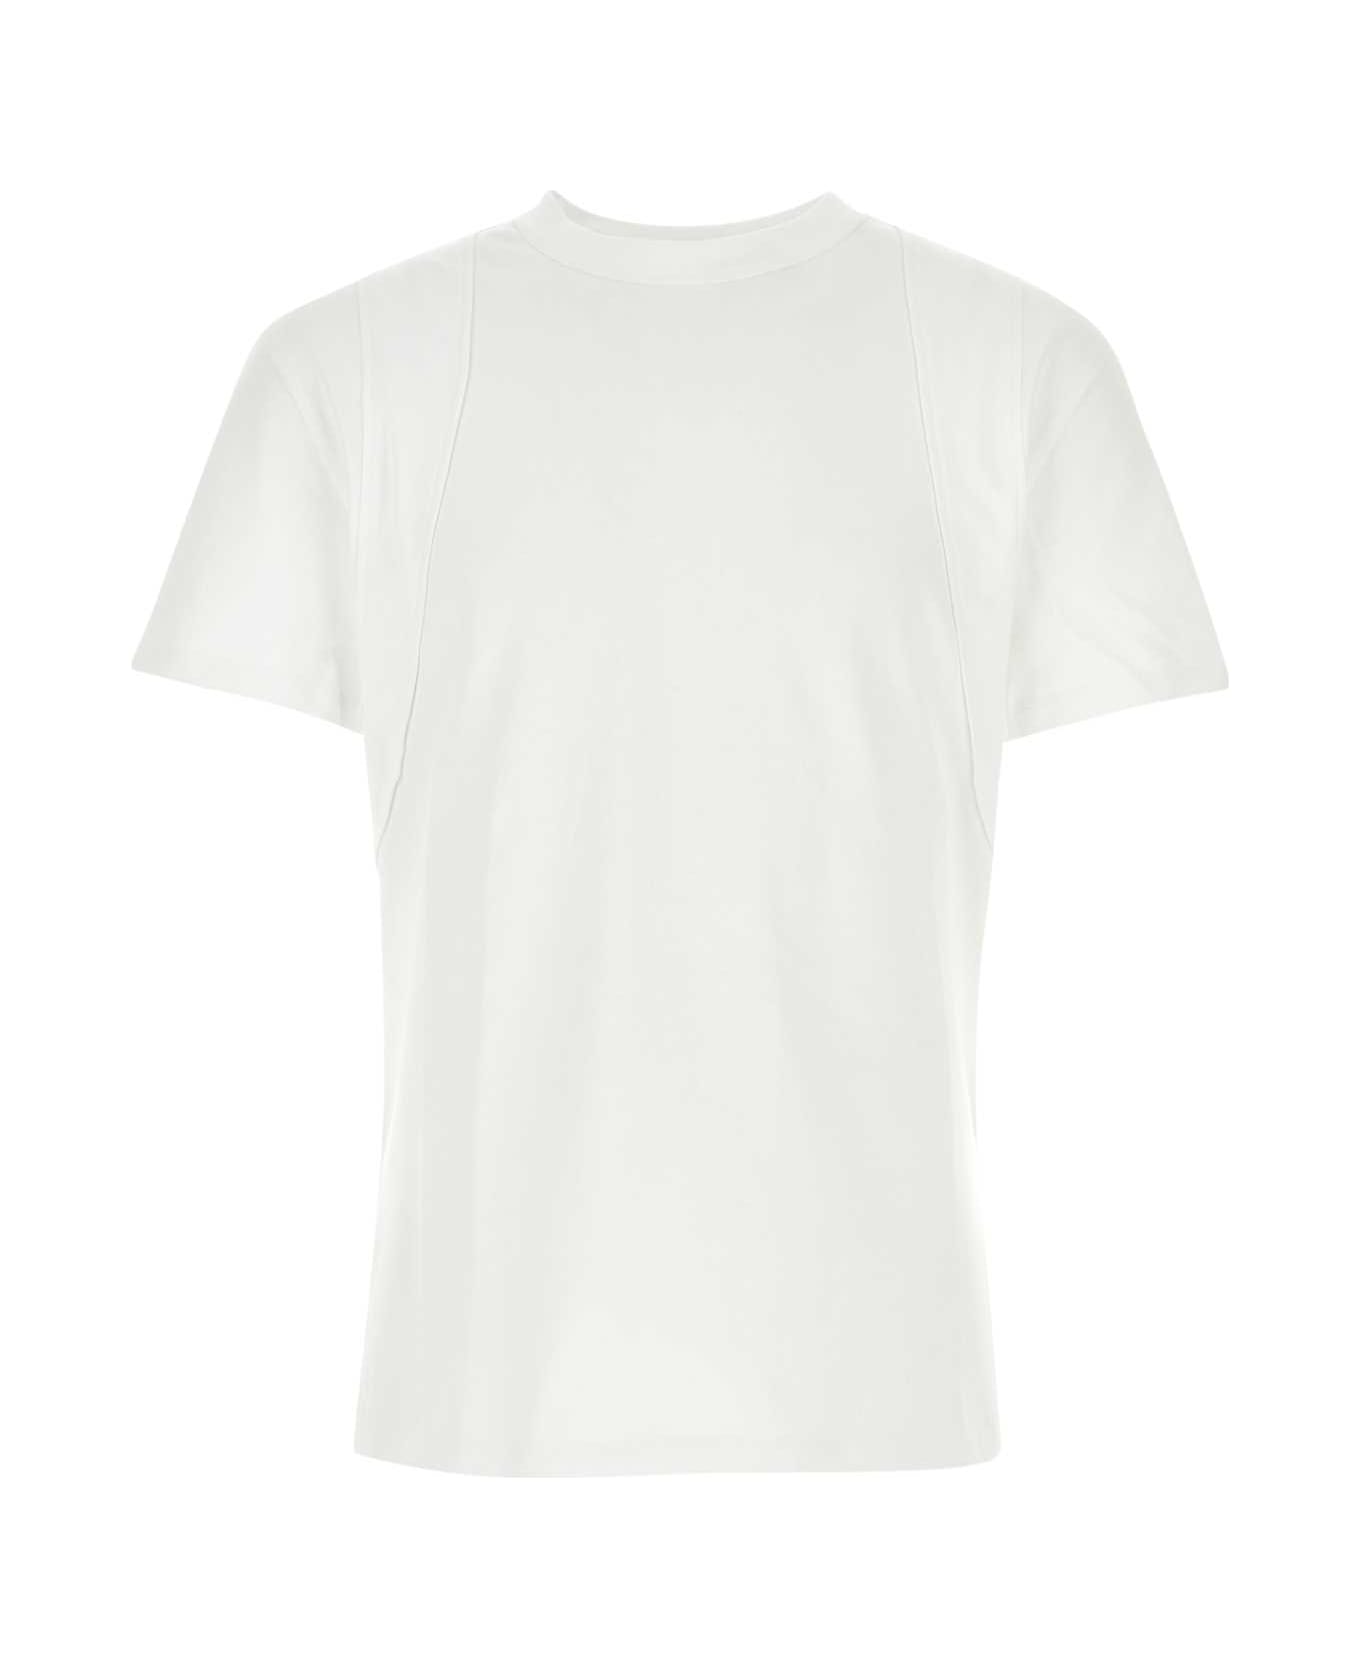 Alexander McQueen White Cotton T-shirt - 9000